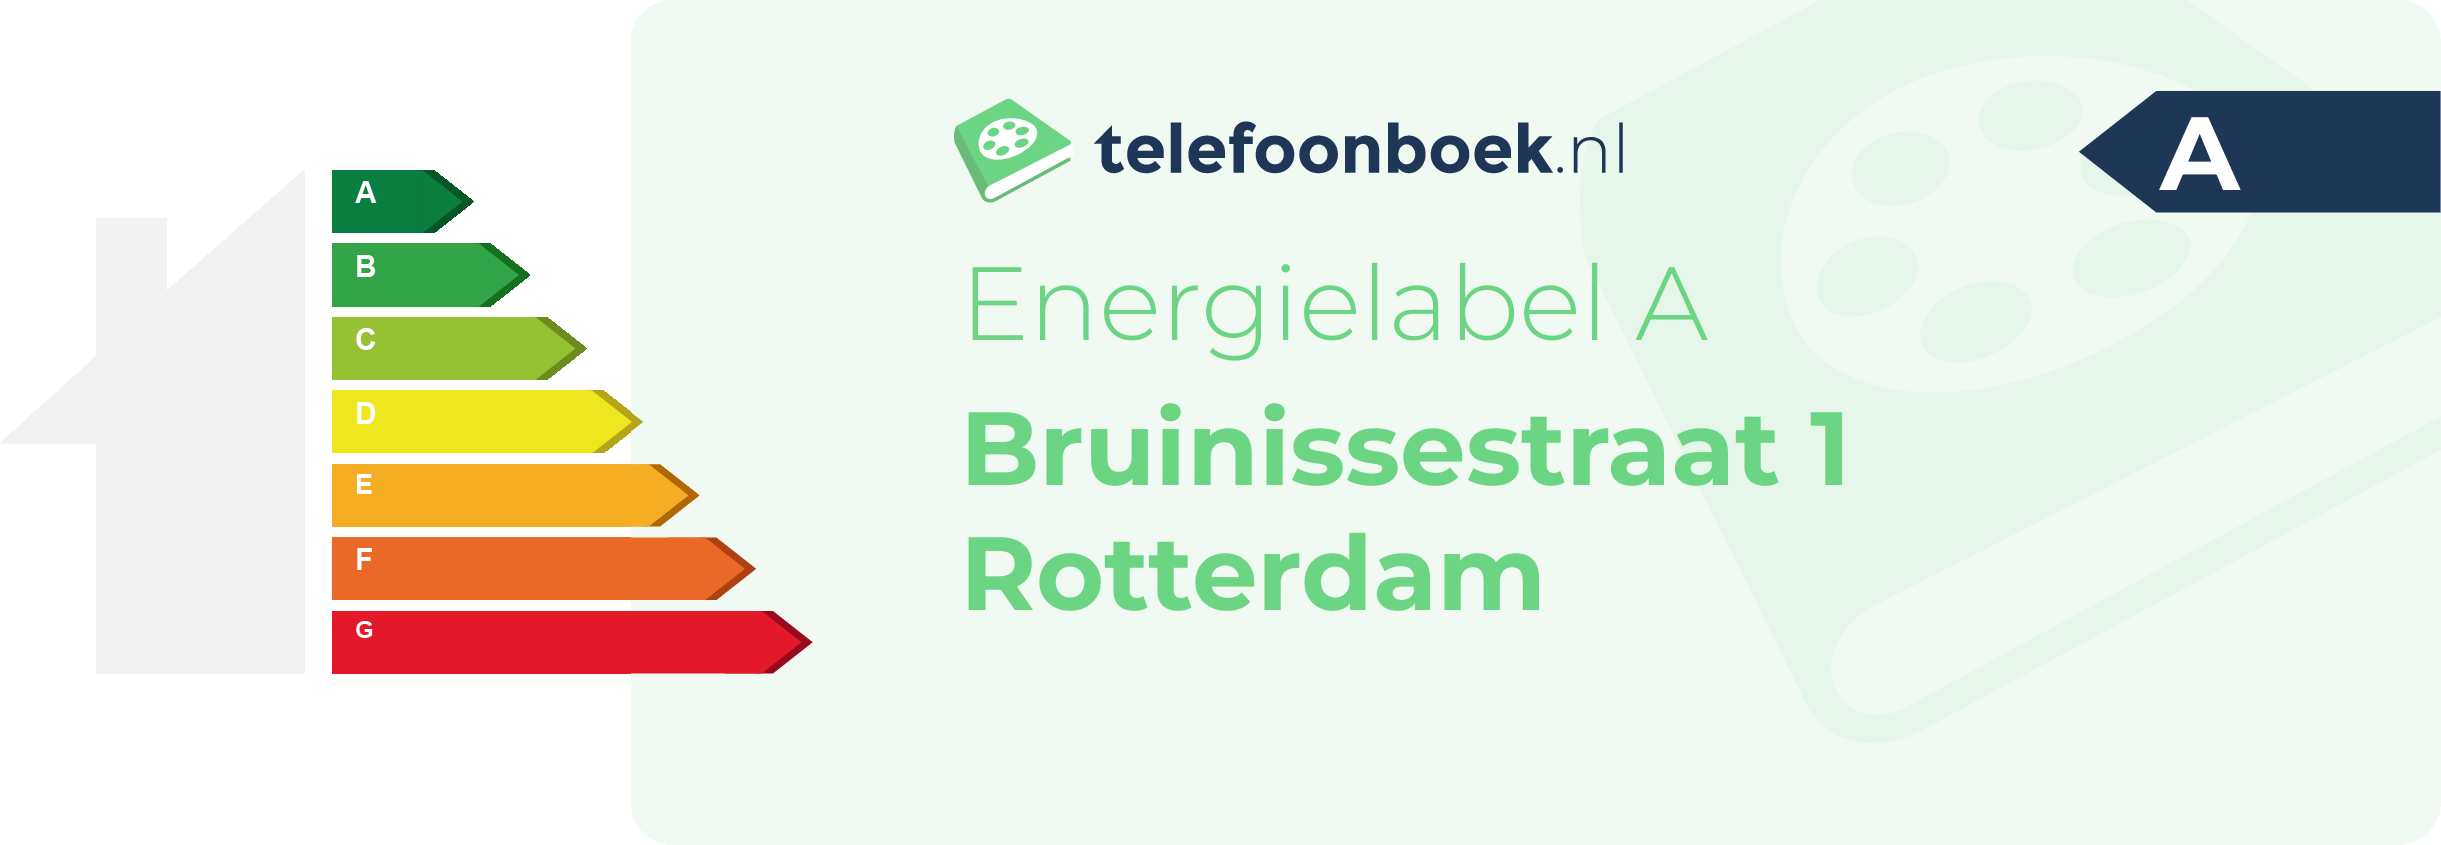 Energielabel Bruinissestraat 1 Rotterdam